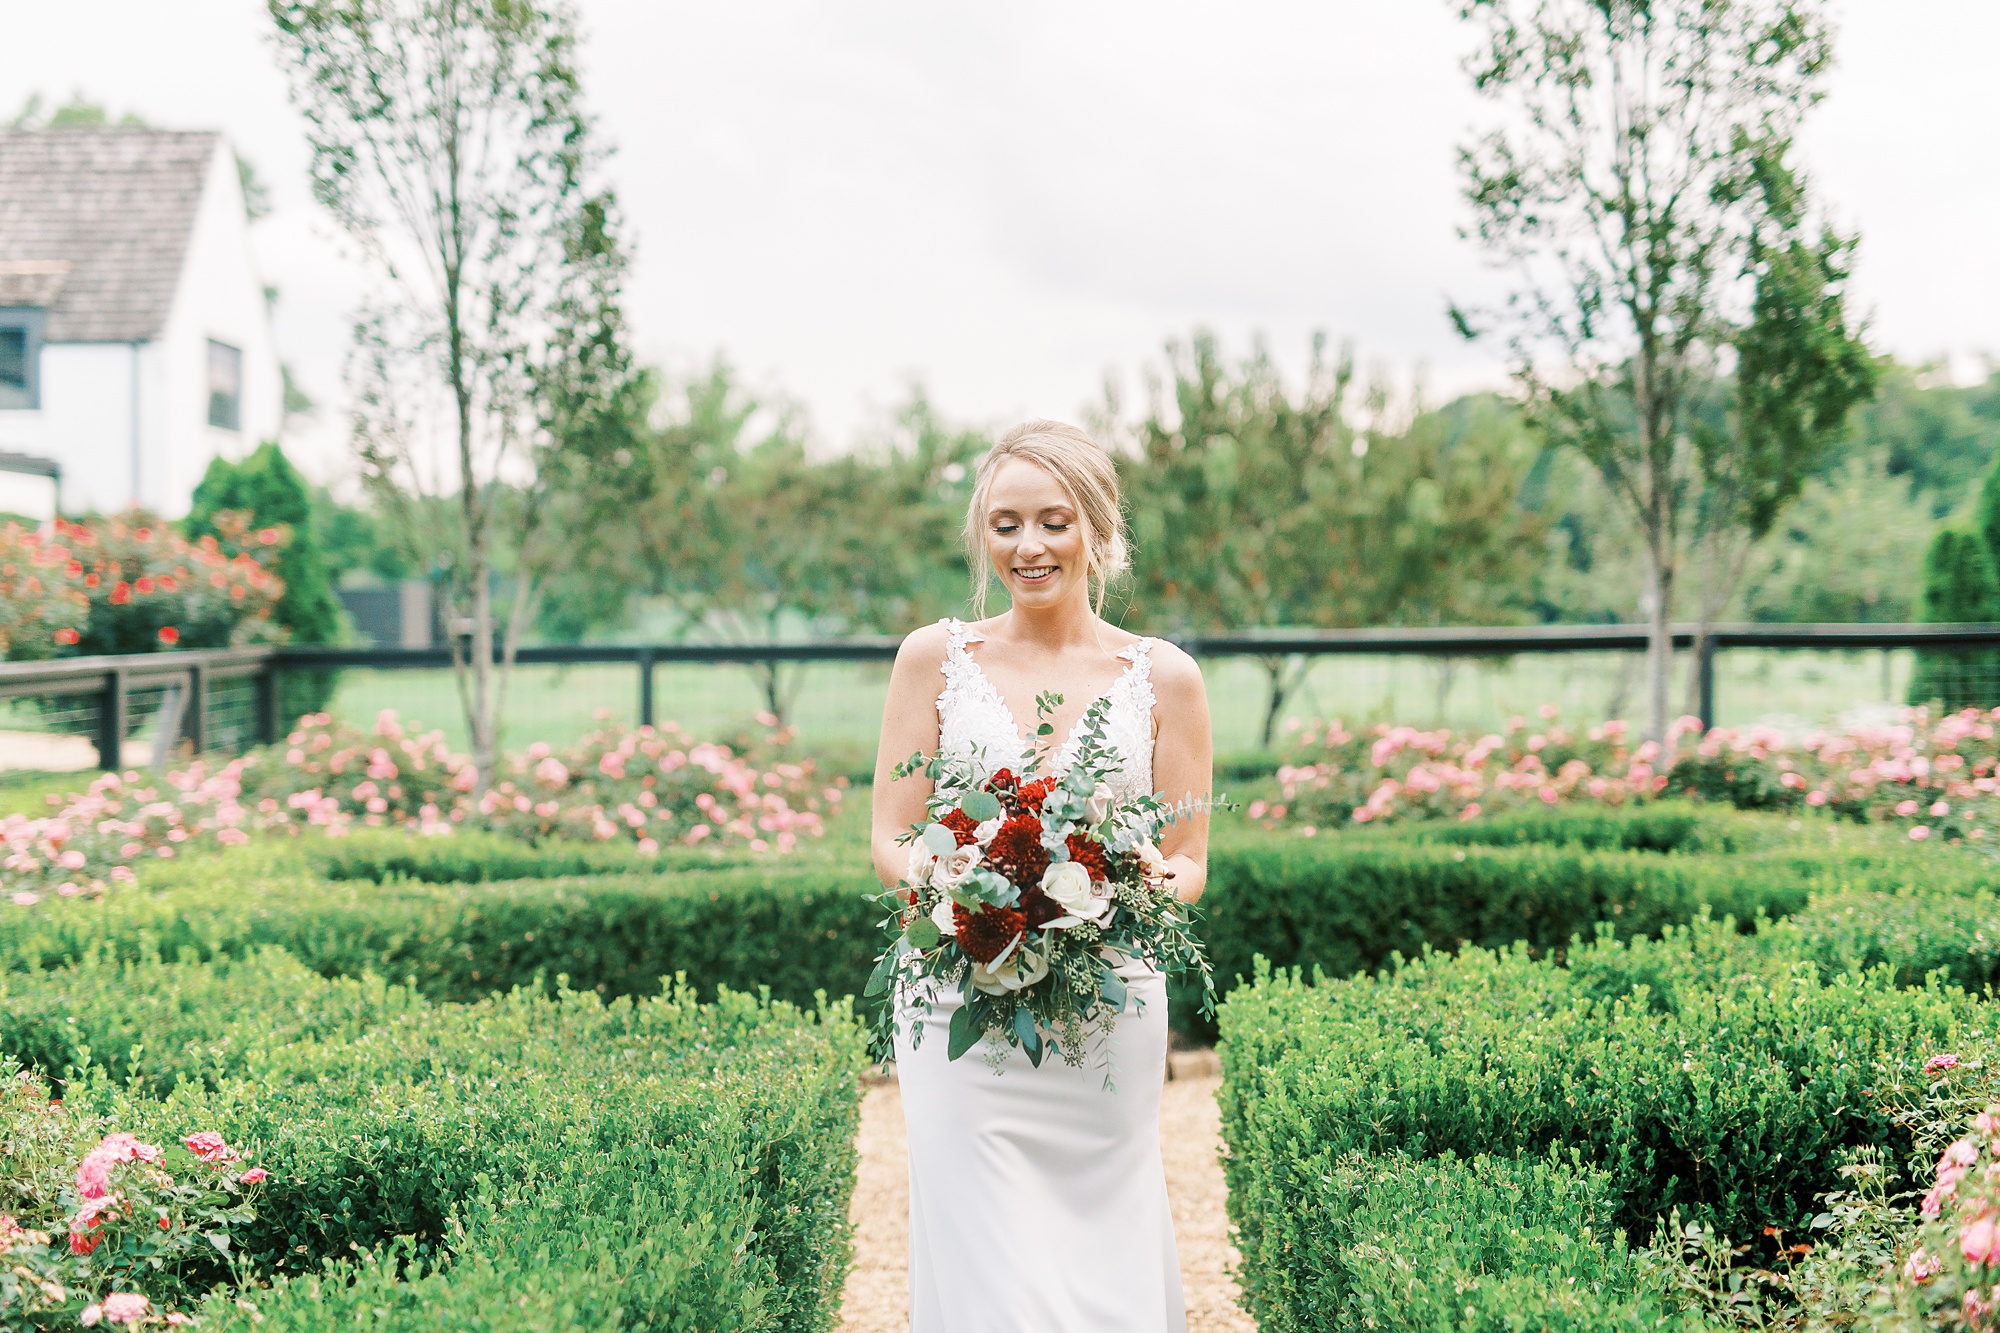 bride holds bouquet during portraits in garden